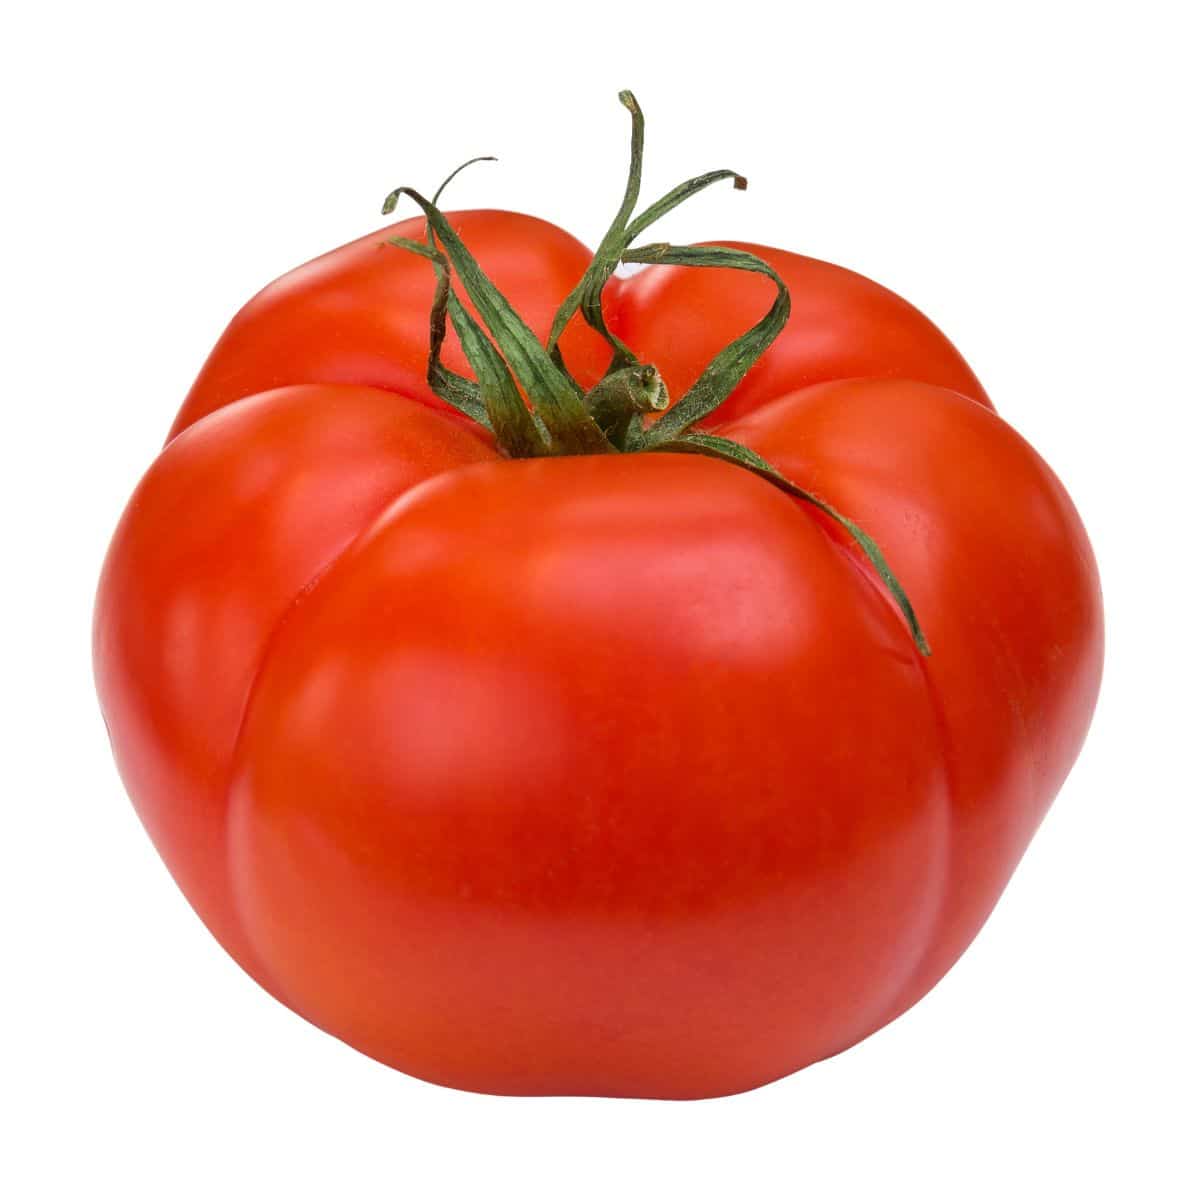 Beefmaster tomato on a white background.